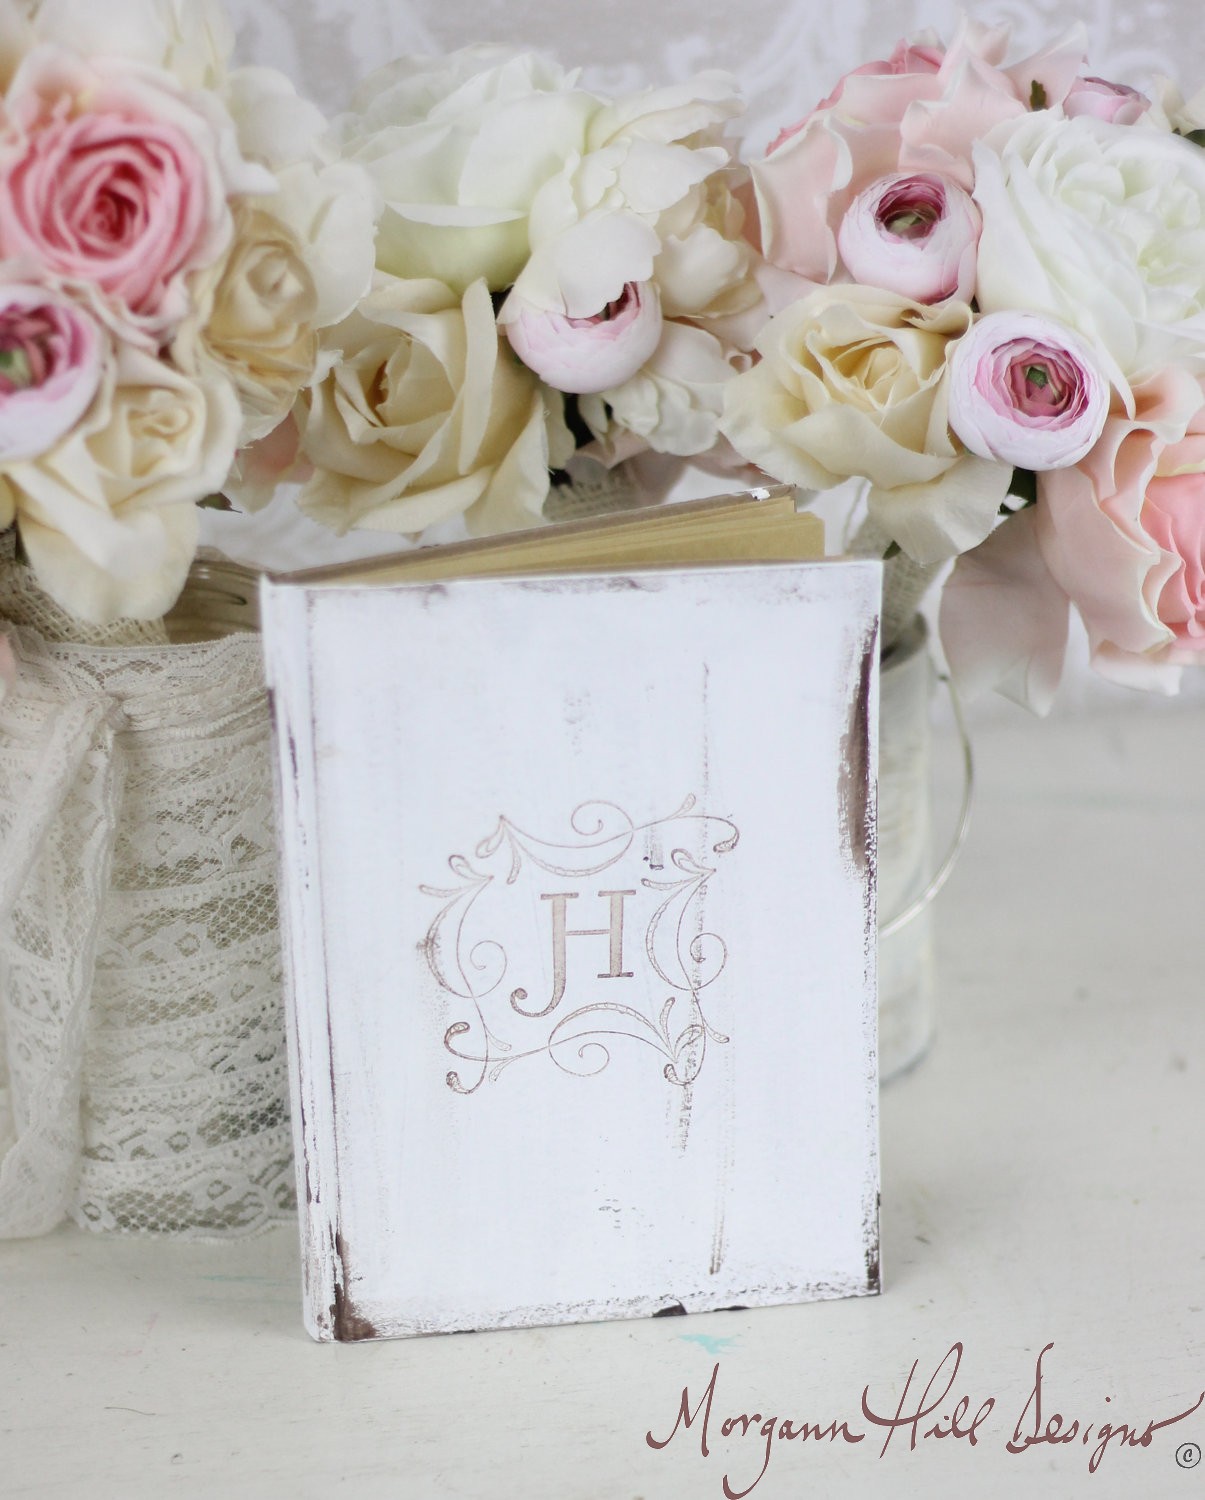 Morgann Hill Designs Bridal Shower Rustic Guest Book Shabby Chic